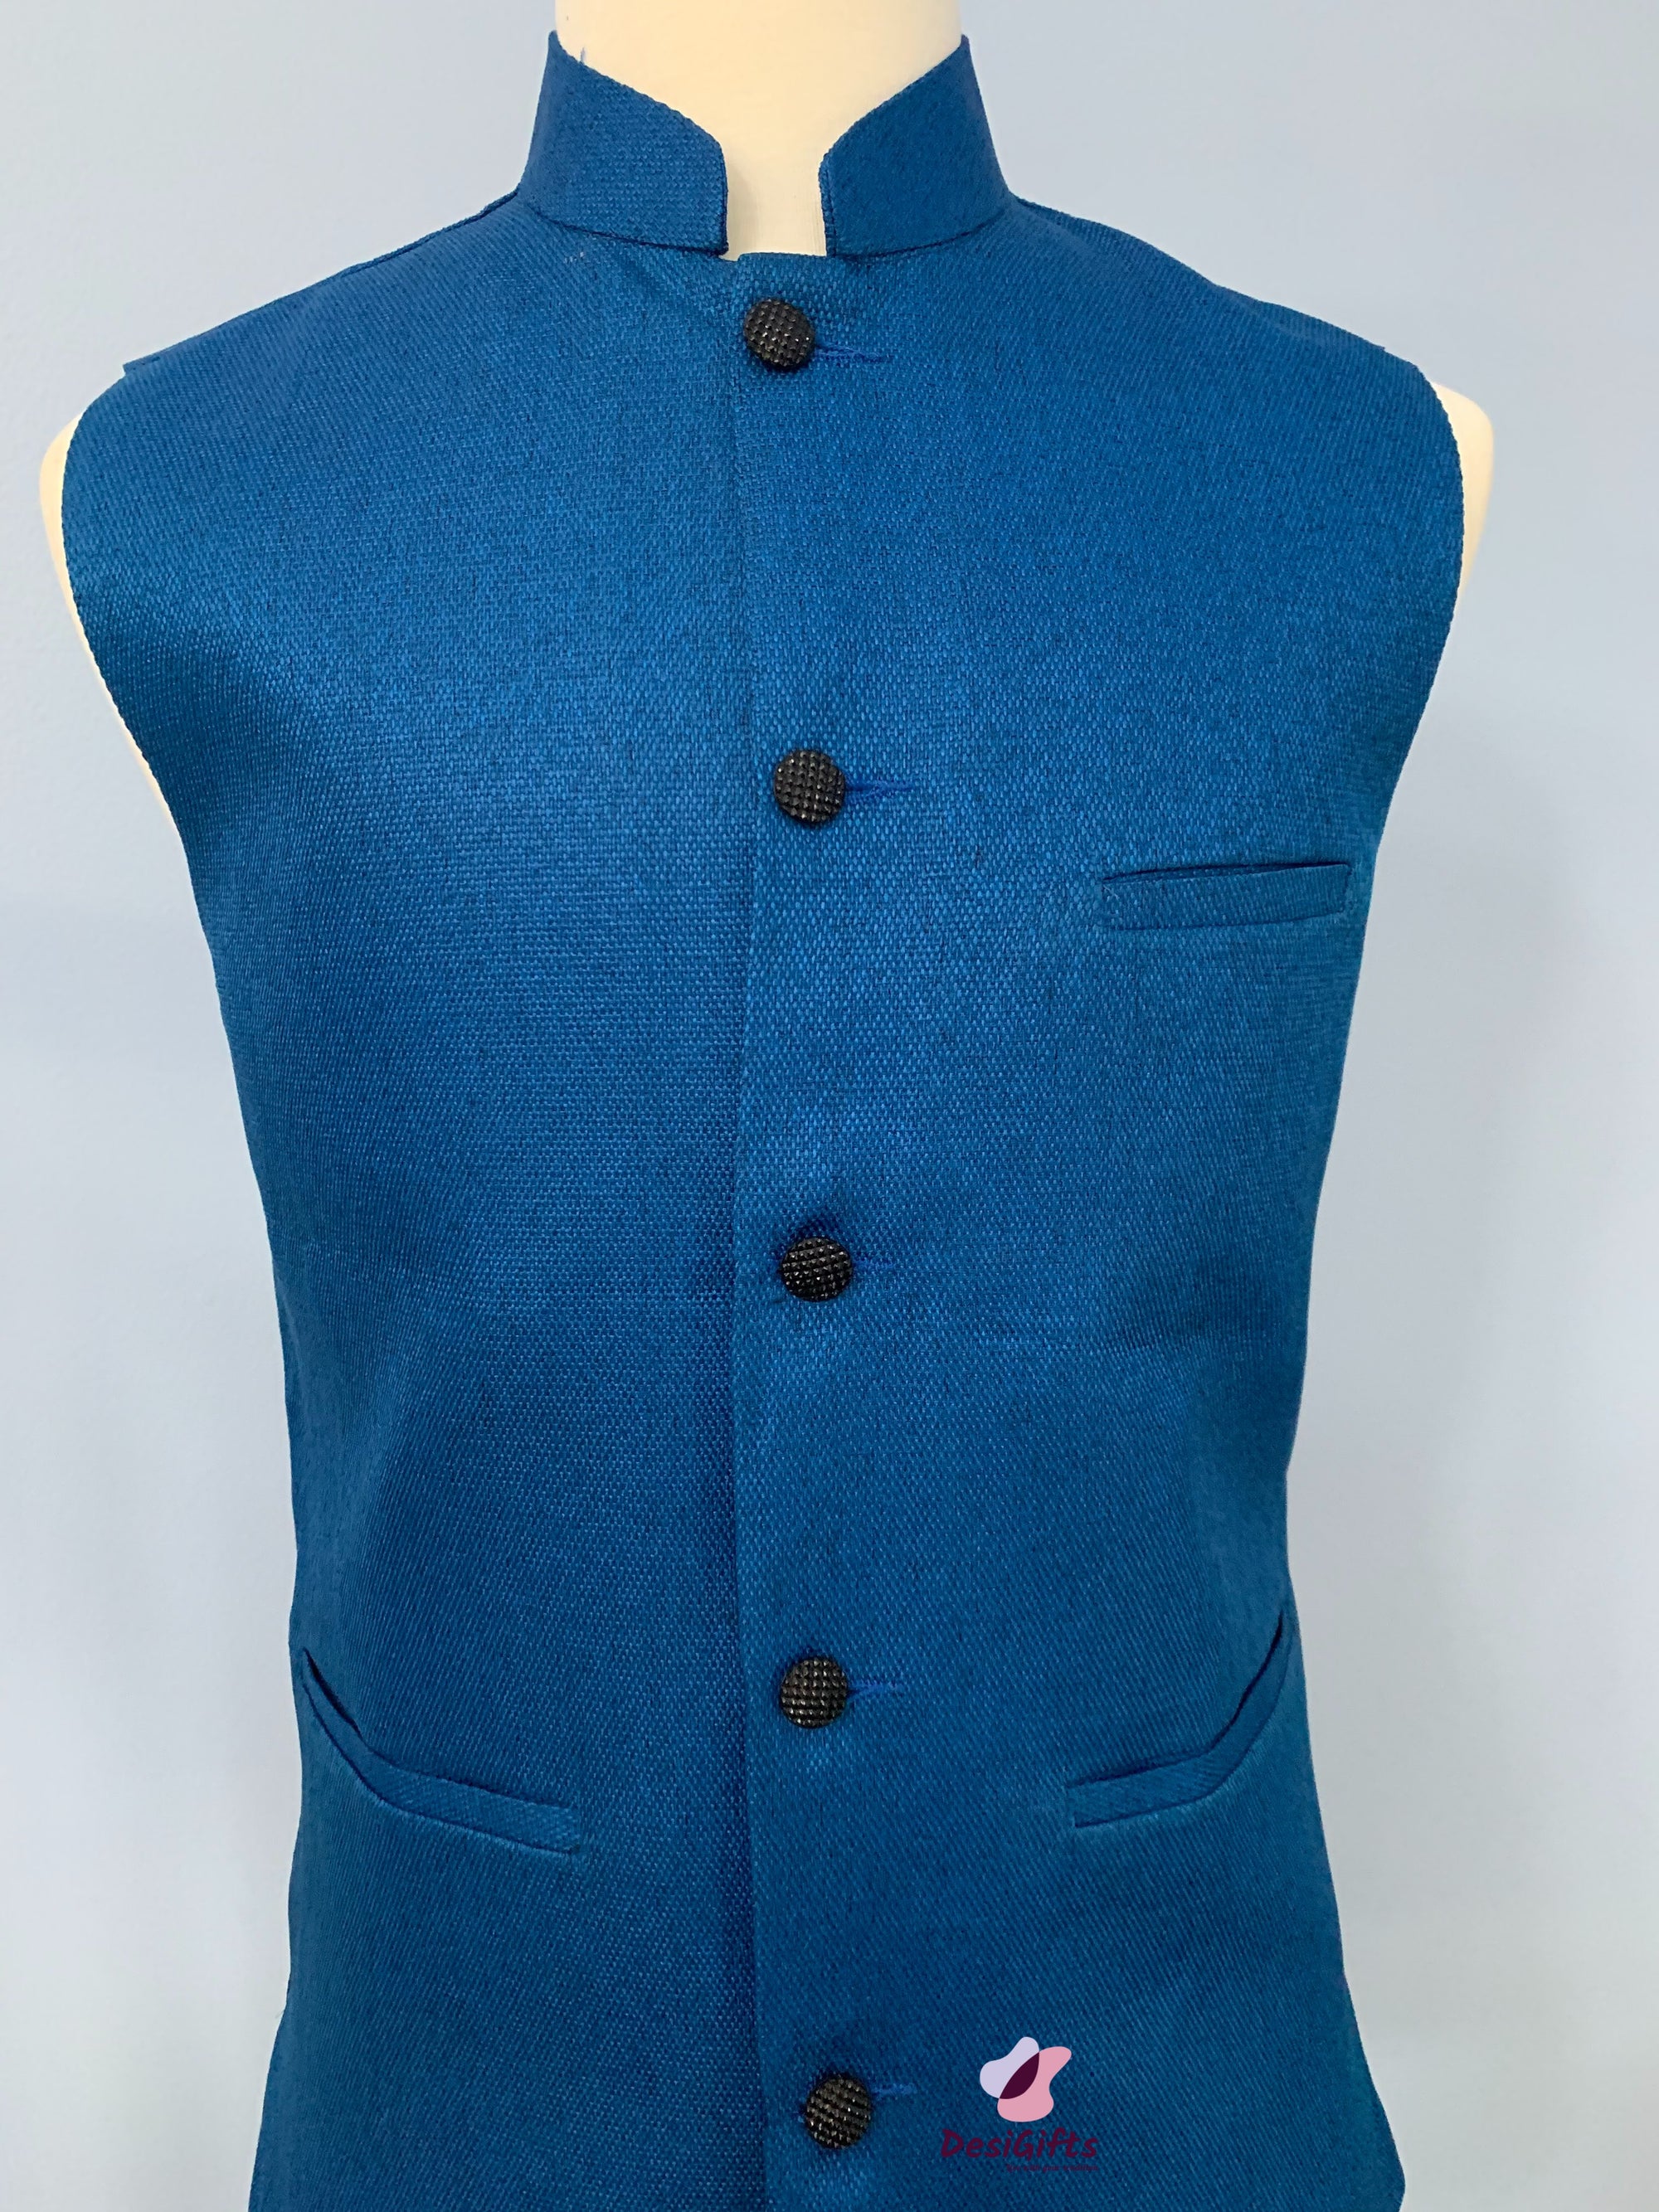 Woven Jute Cotton Nehru Style Jacket, Design, MJ#DBL 363